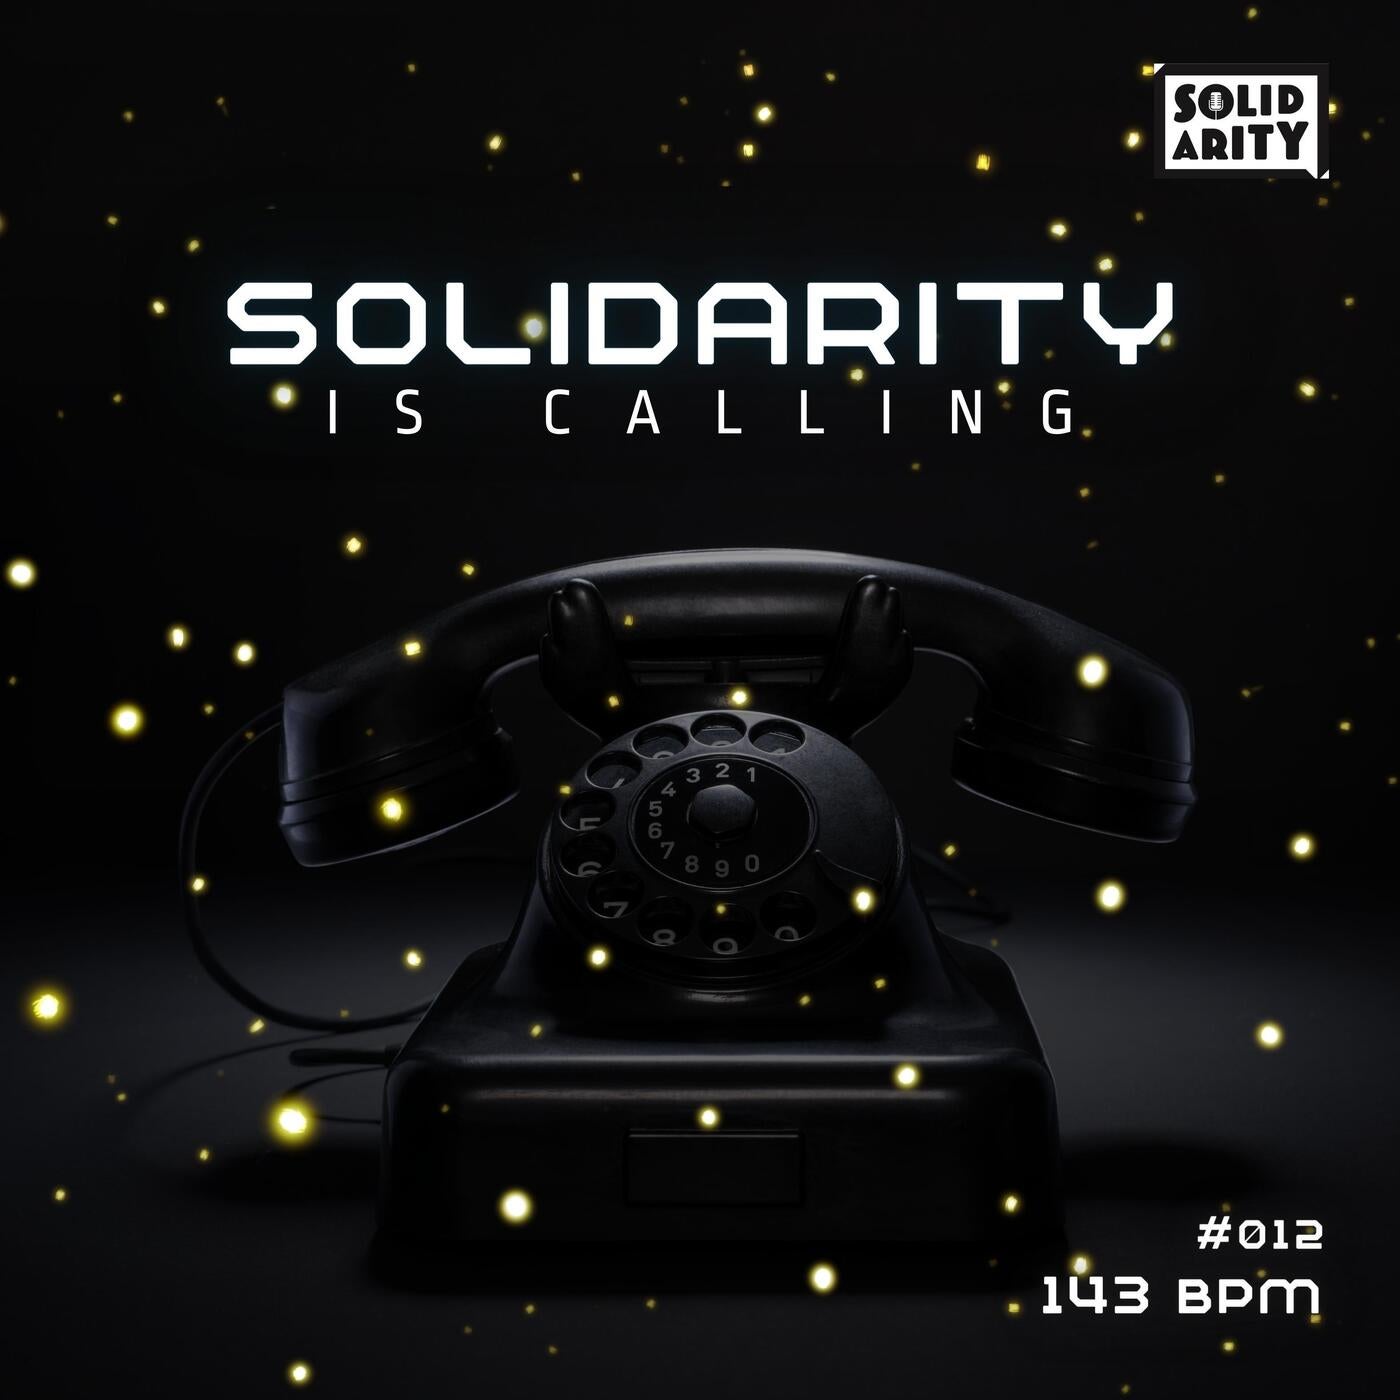 Solidarity Is Calling